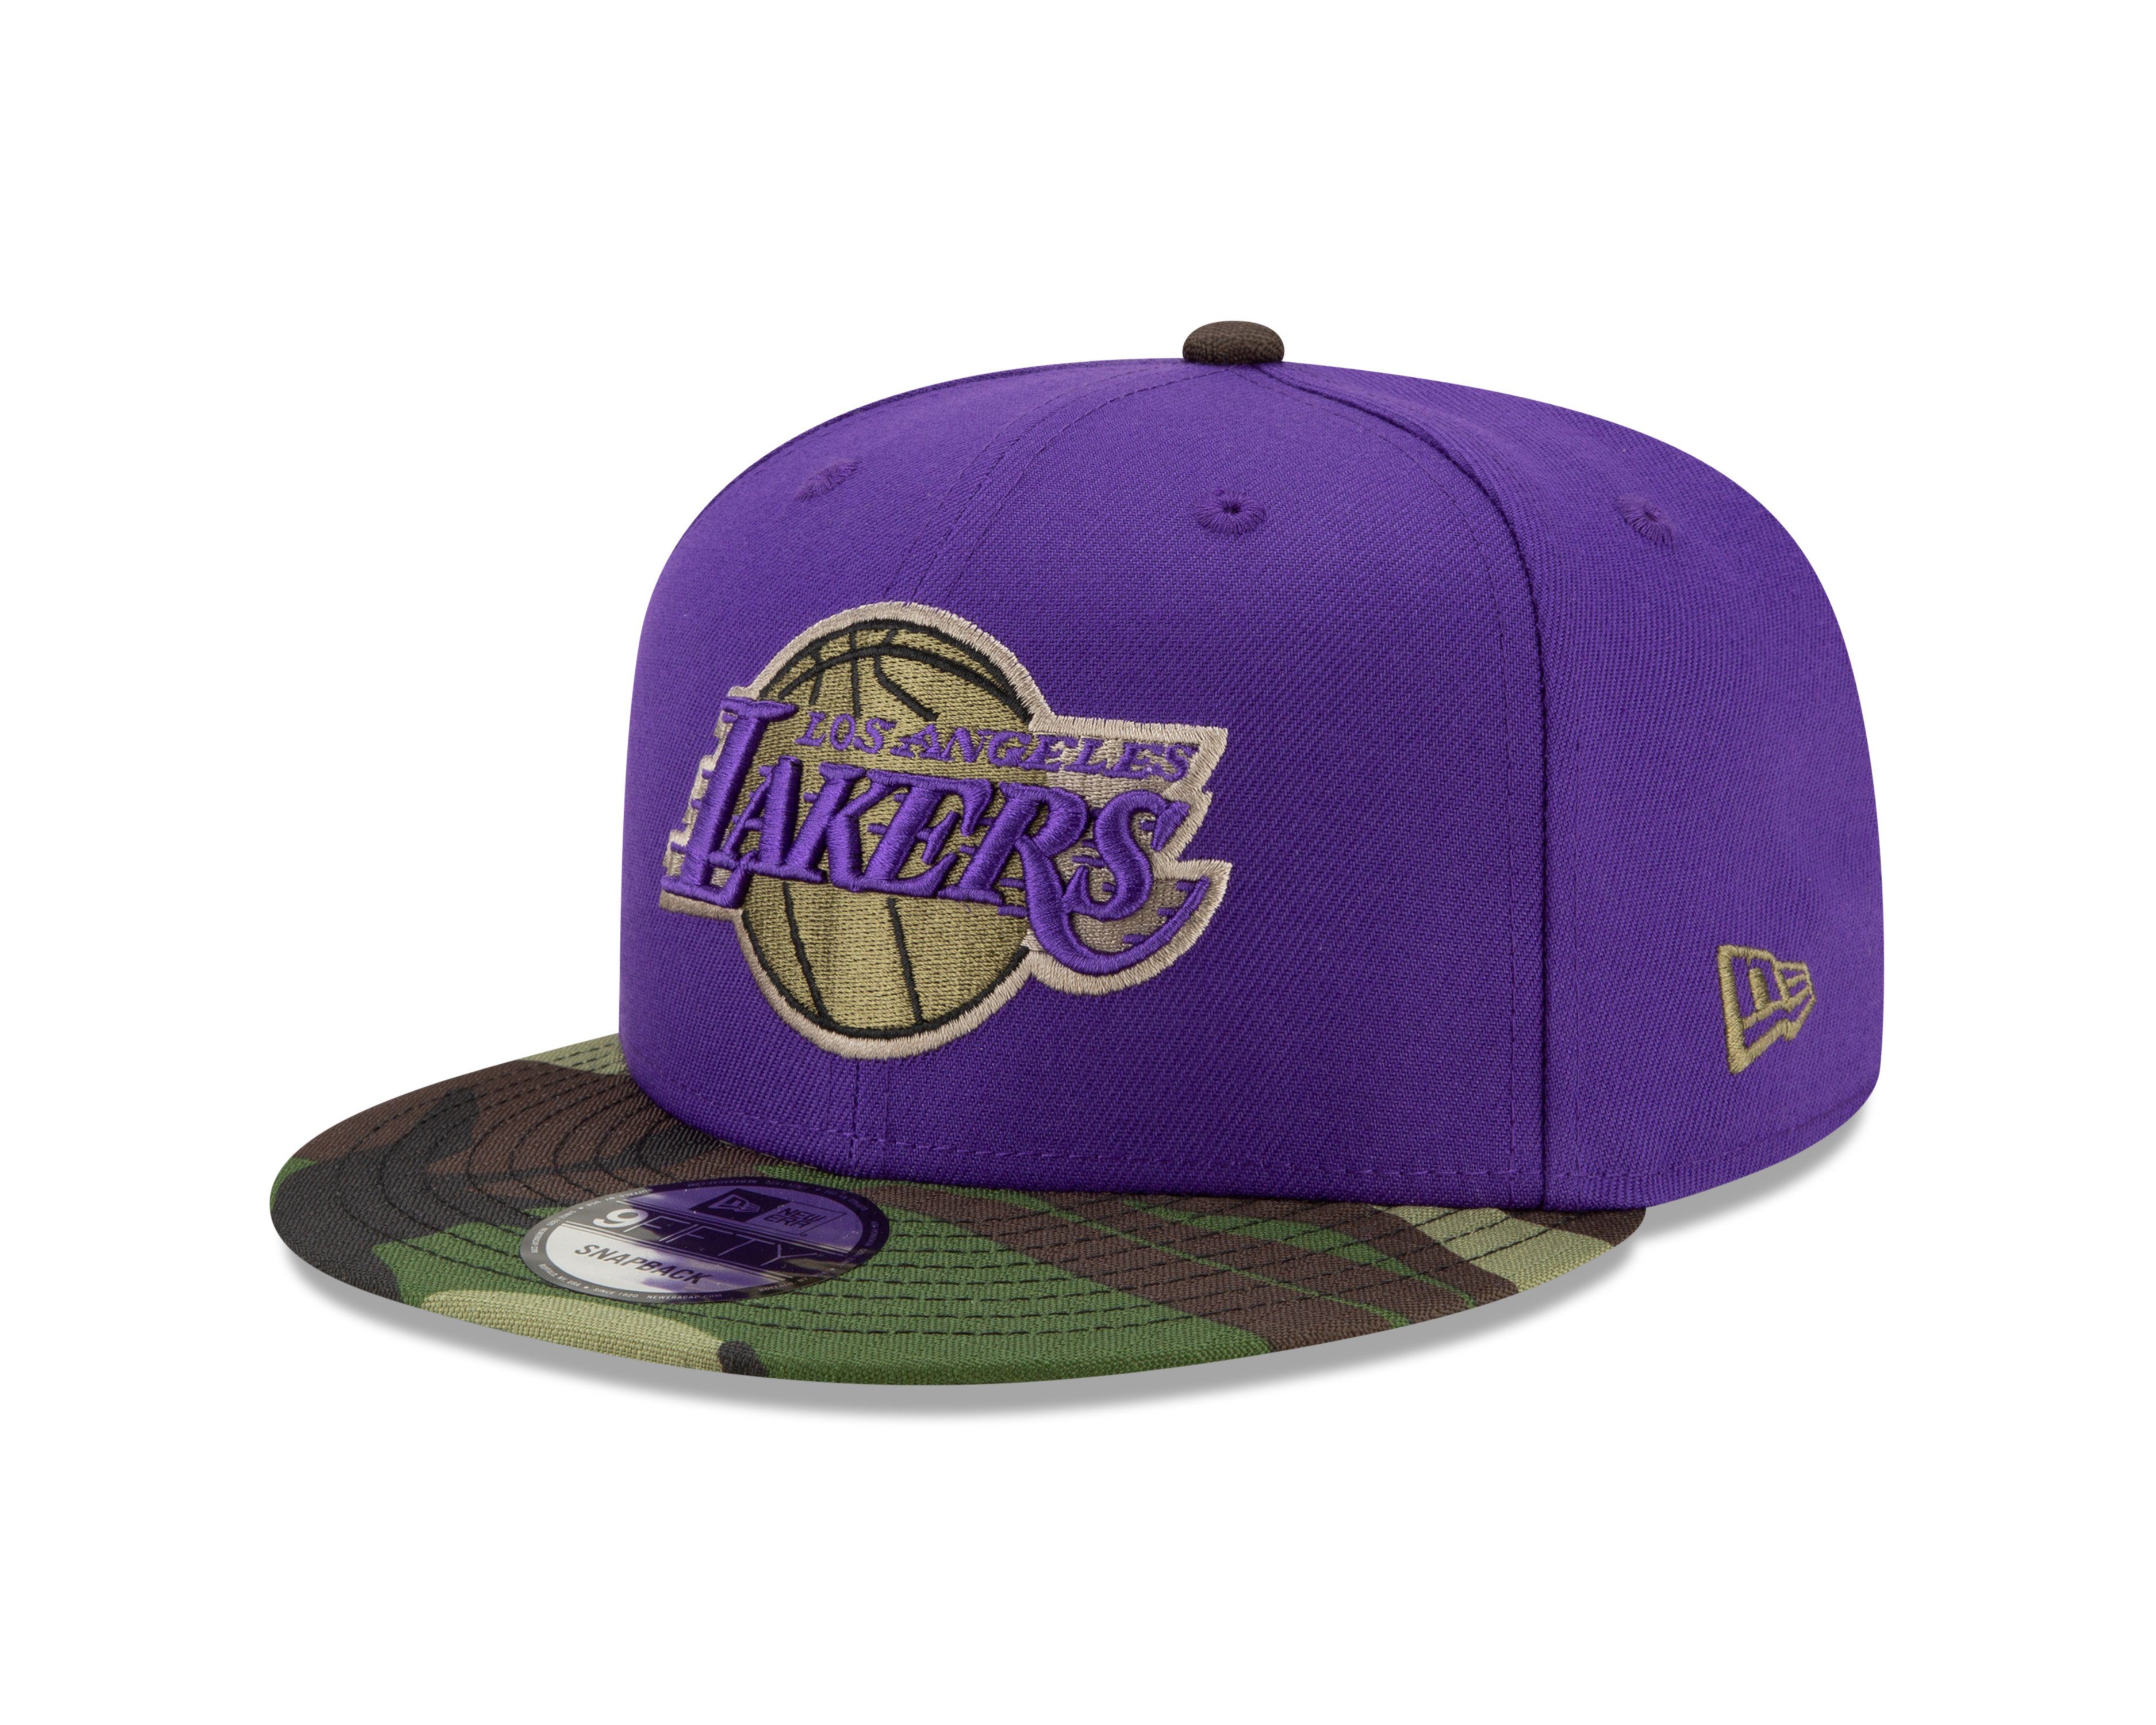 New New NBA Lakers (1-St) Los All Angeles Game Era Era Cap Cap Star 9Fifty Baseball